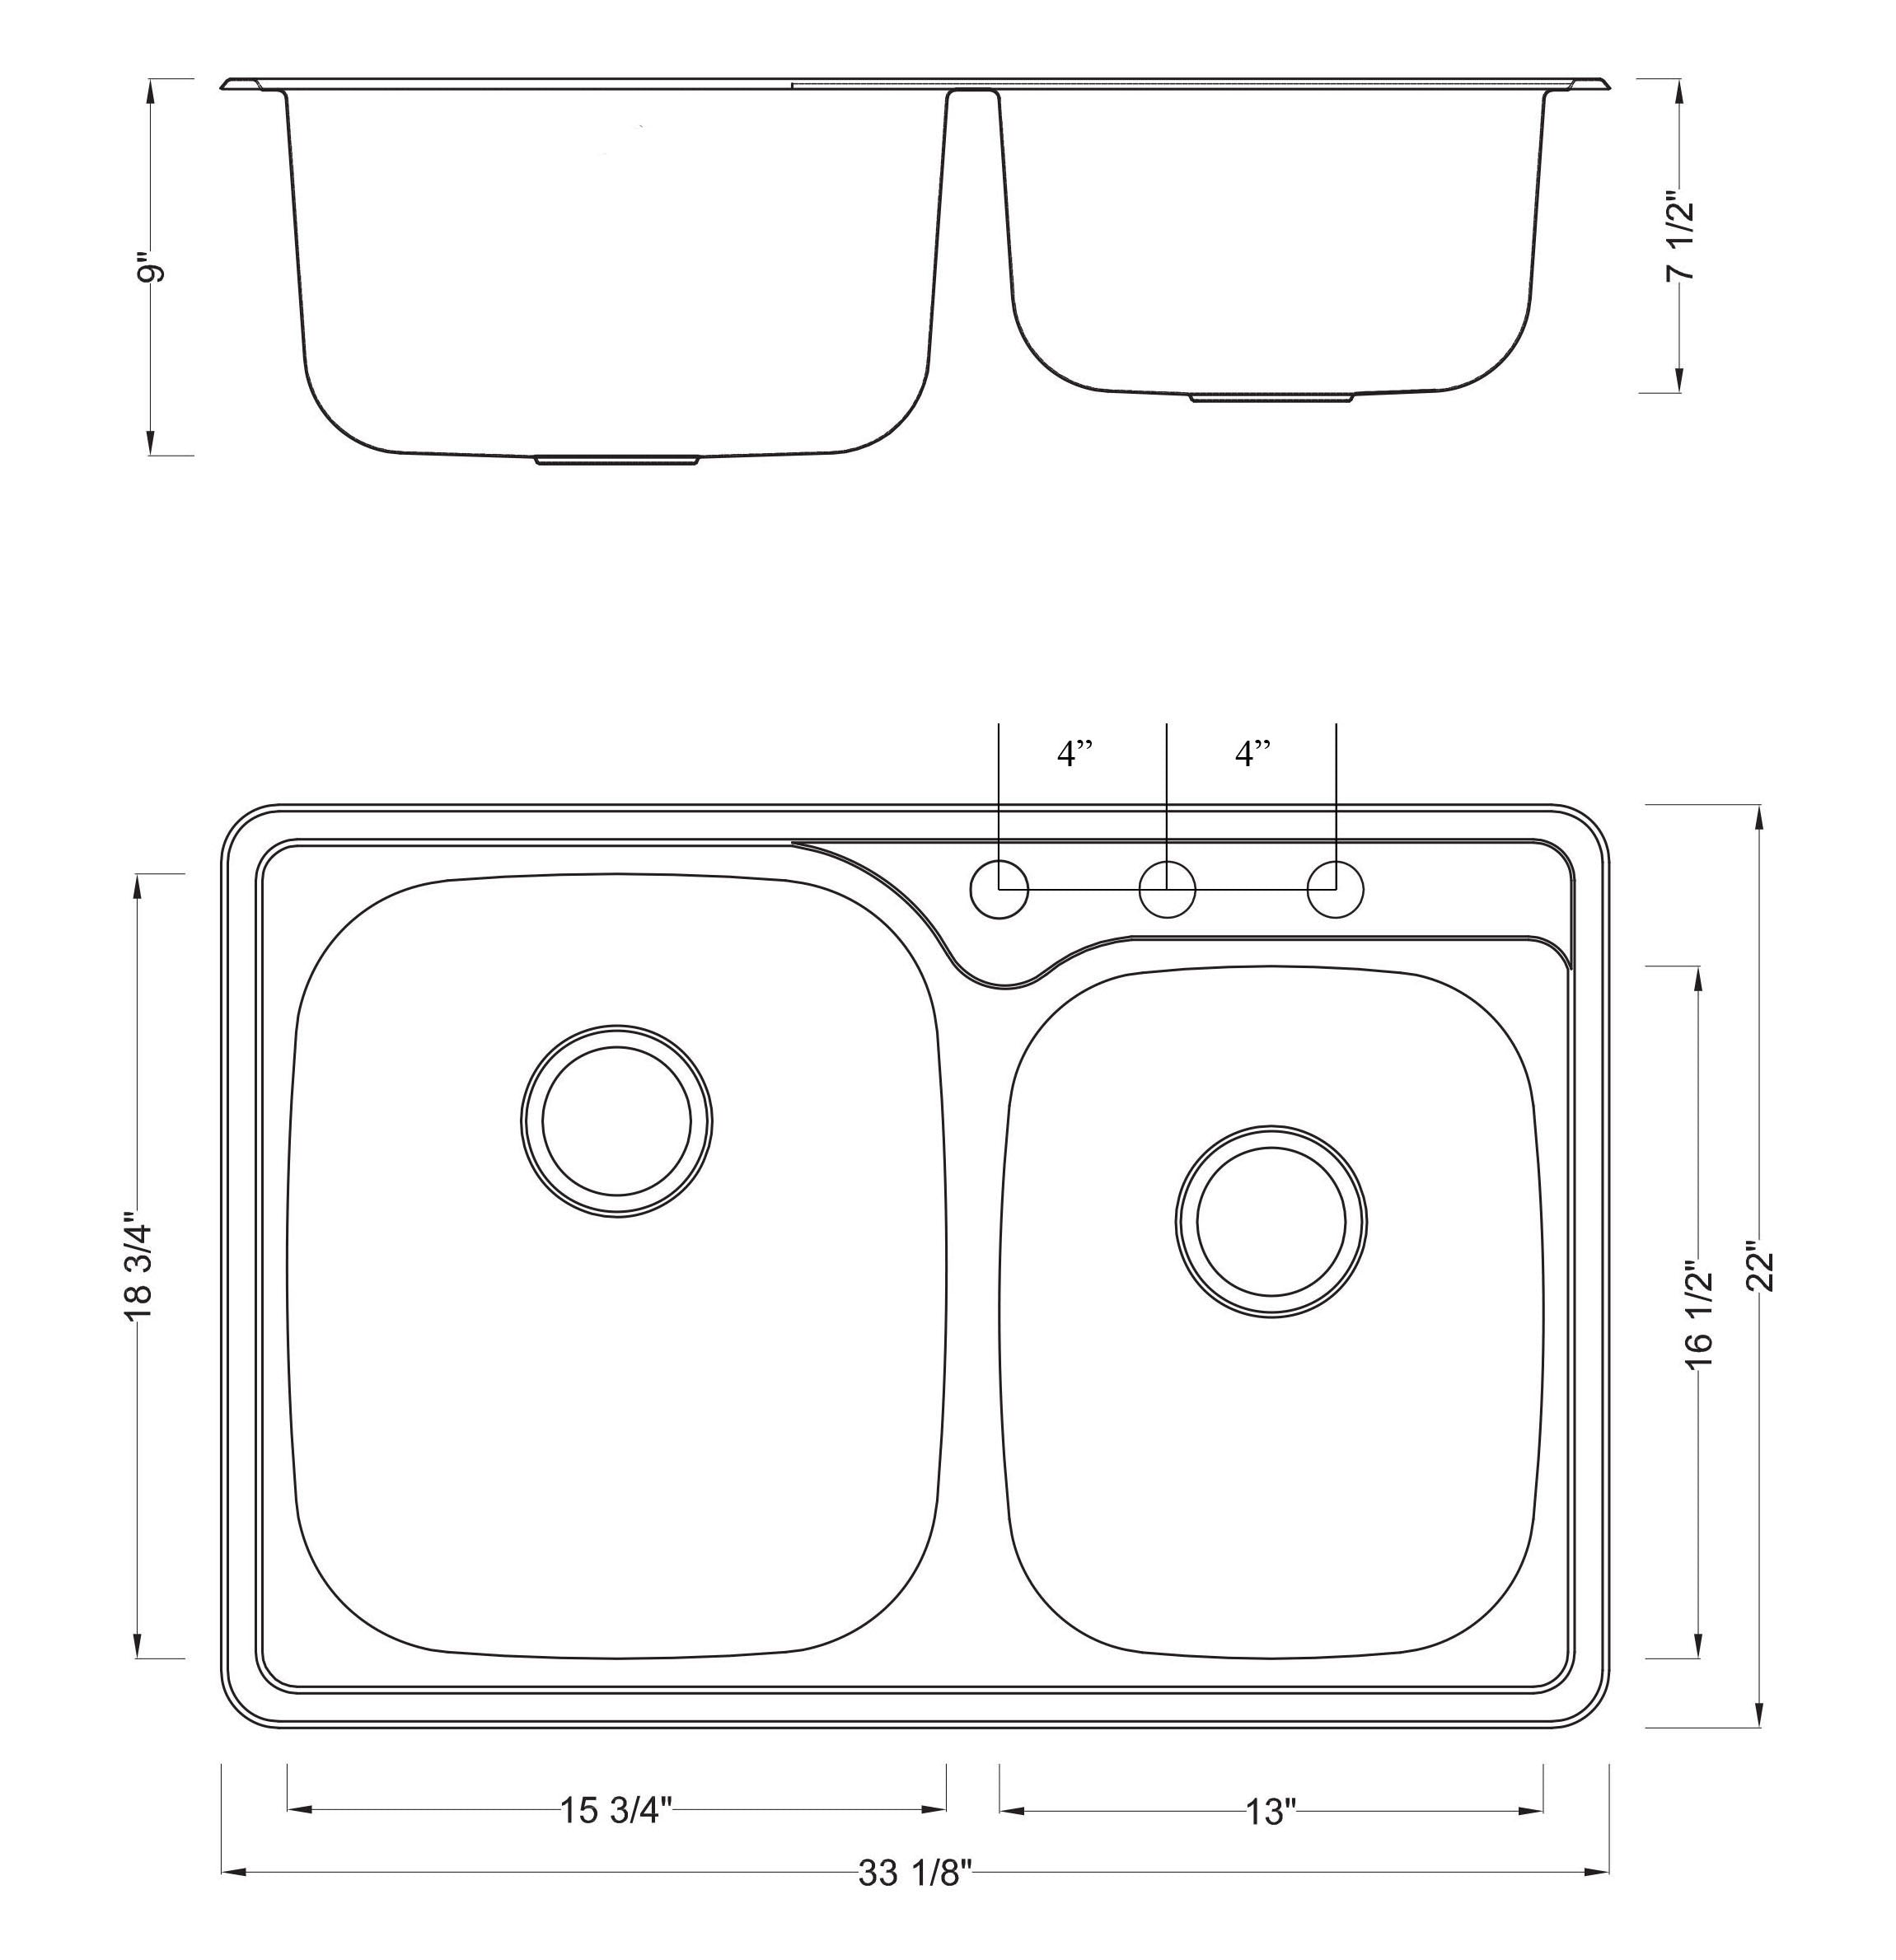 33 in. x 22 in. Topmount / Drop-in 18 Gauge Stainless Steel Double Bowl (60/40) Kitchen Sink with 9 in. Deep